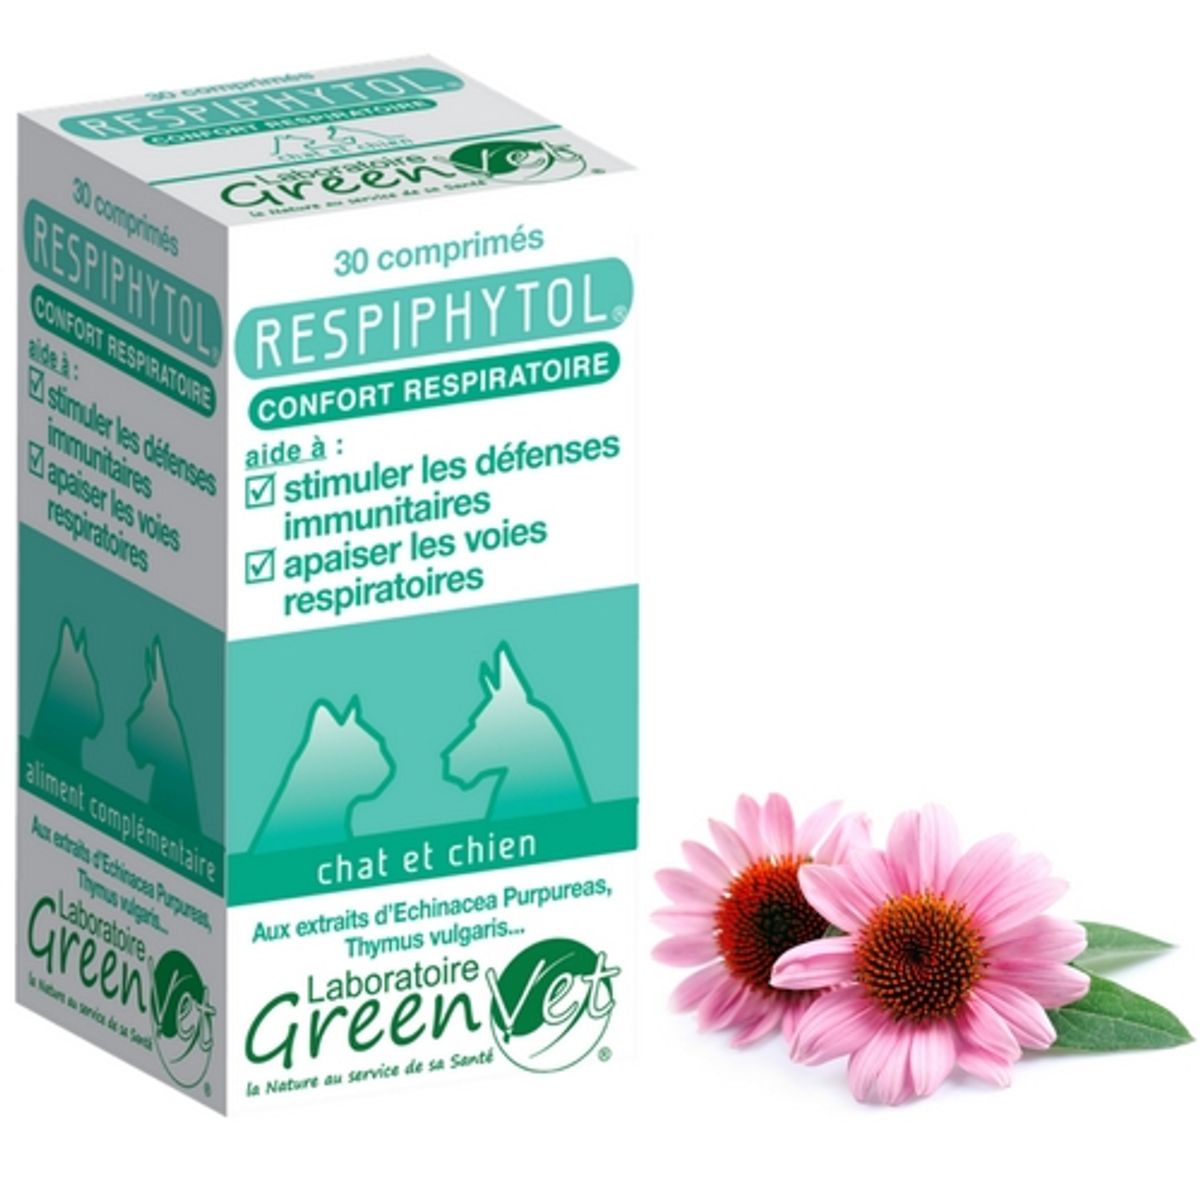 Respiphytol confort respiratoire - Greenvet